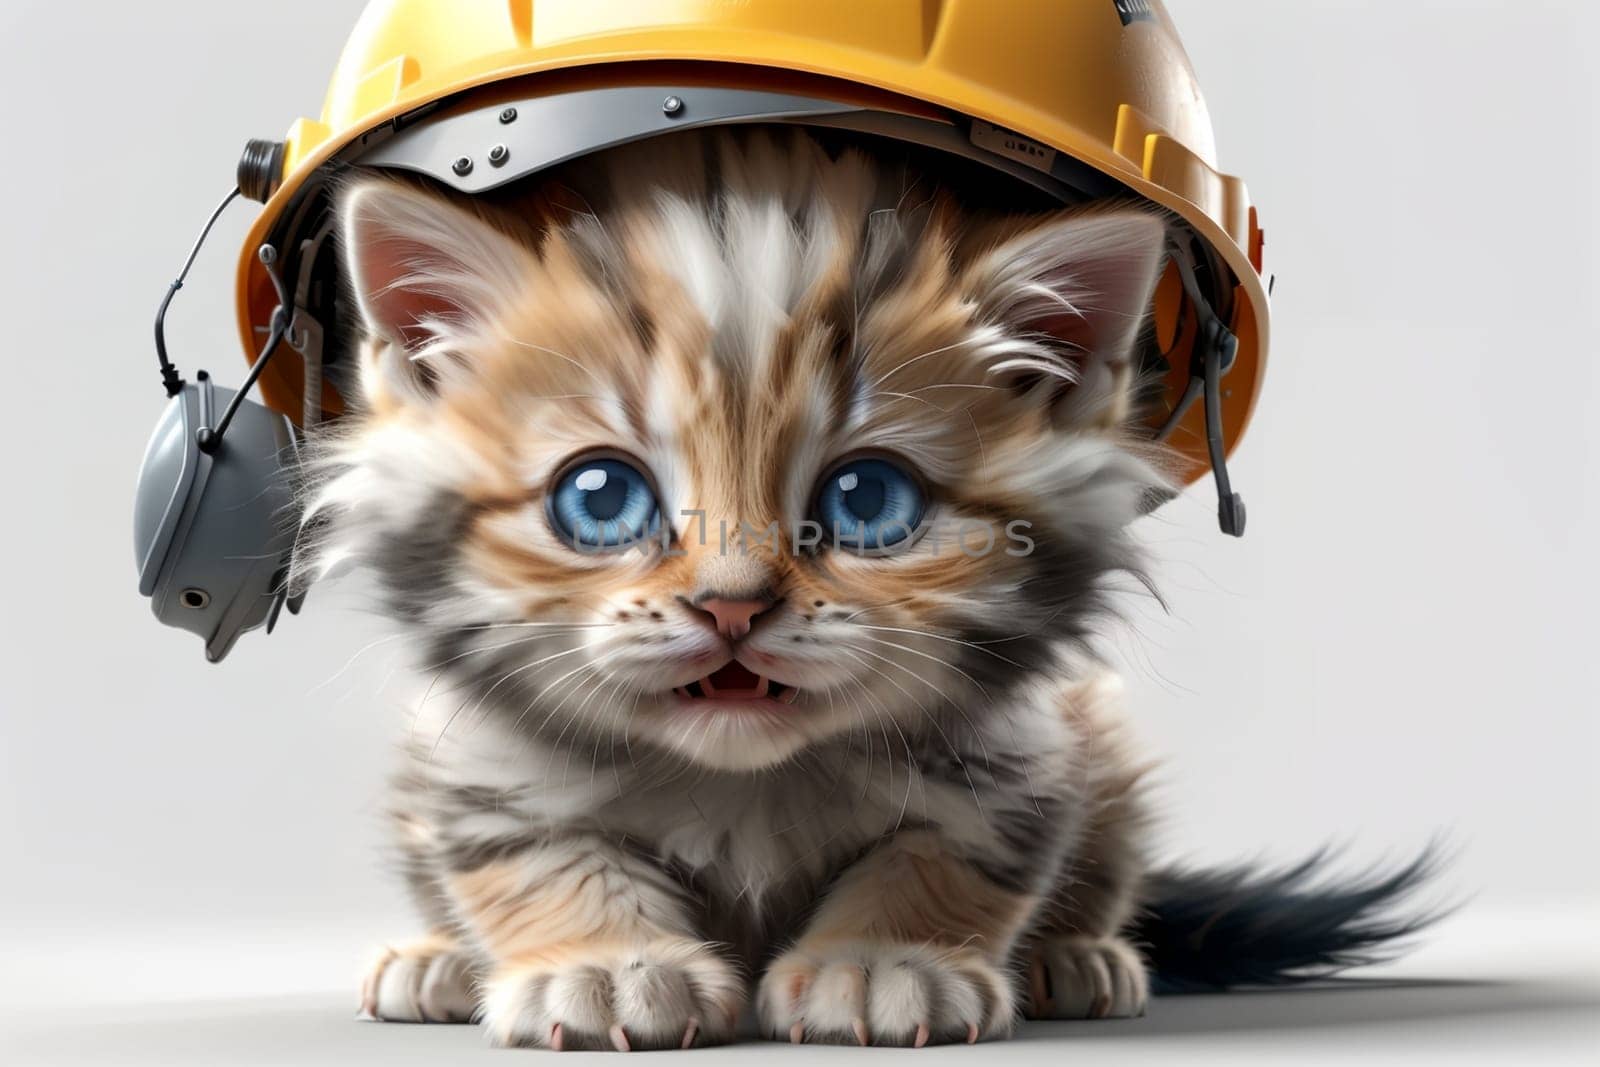 Cute cat in a construction helmet, builder .